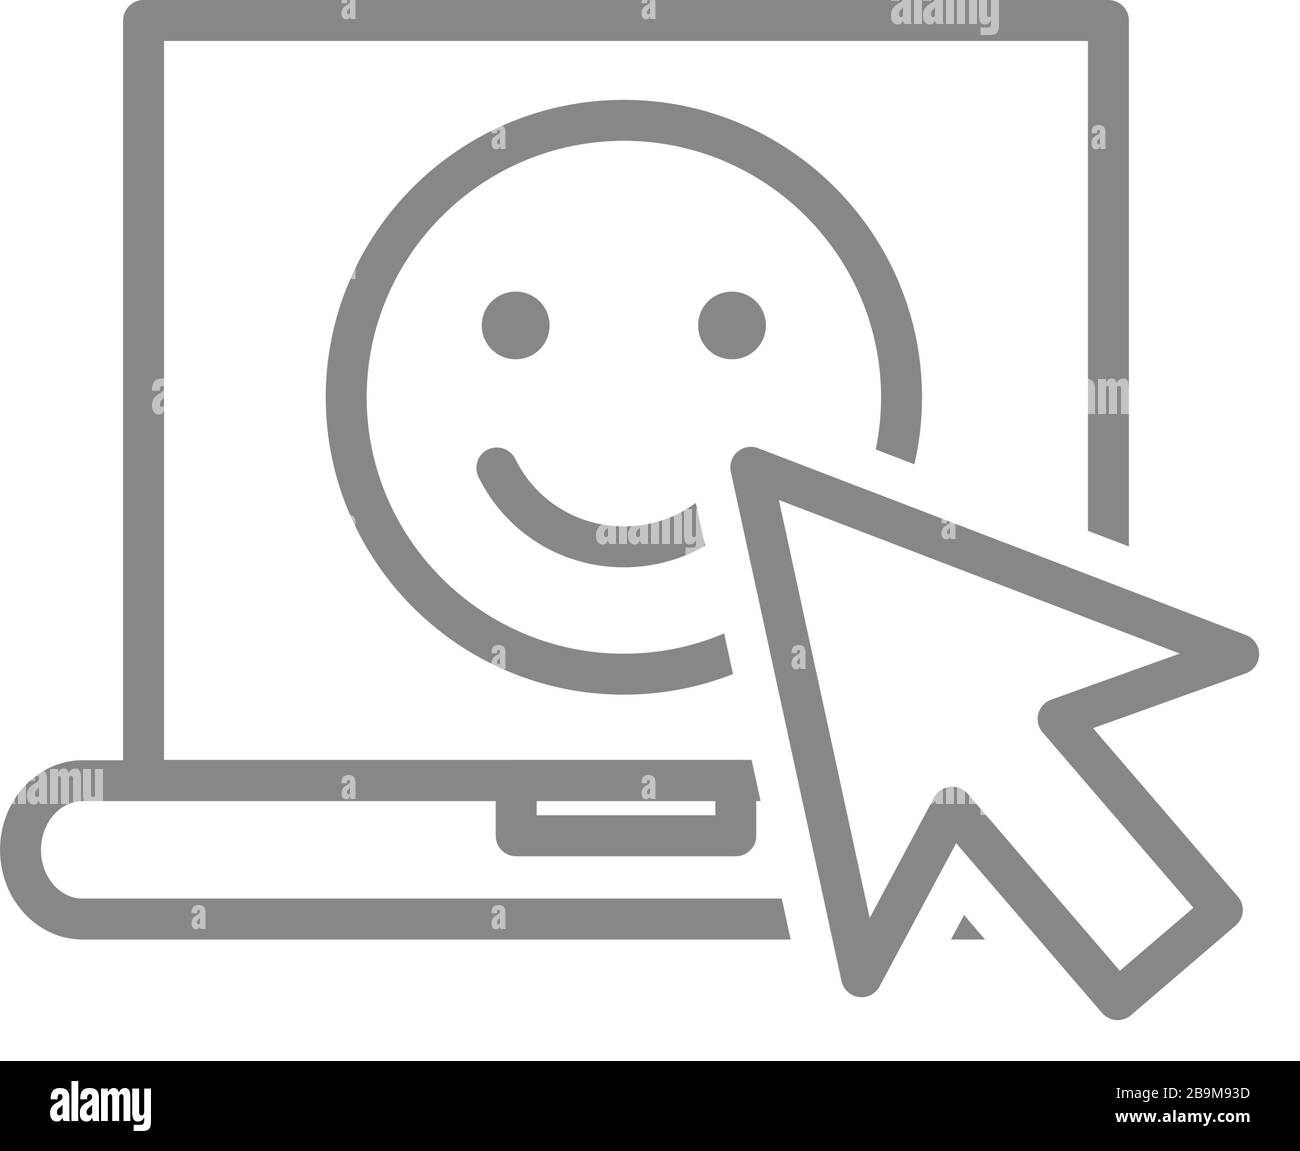 Laptop with happy face line icon. Customer satisfaction, positive feedback symbol Stock Vector